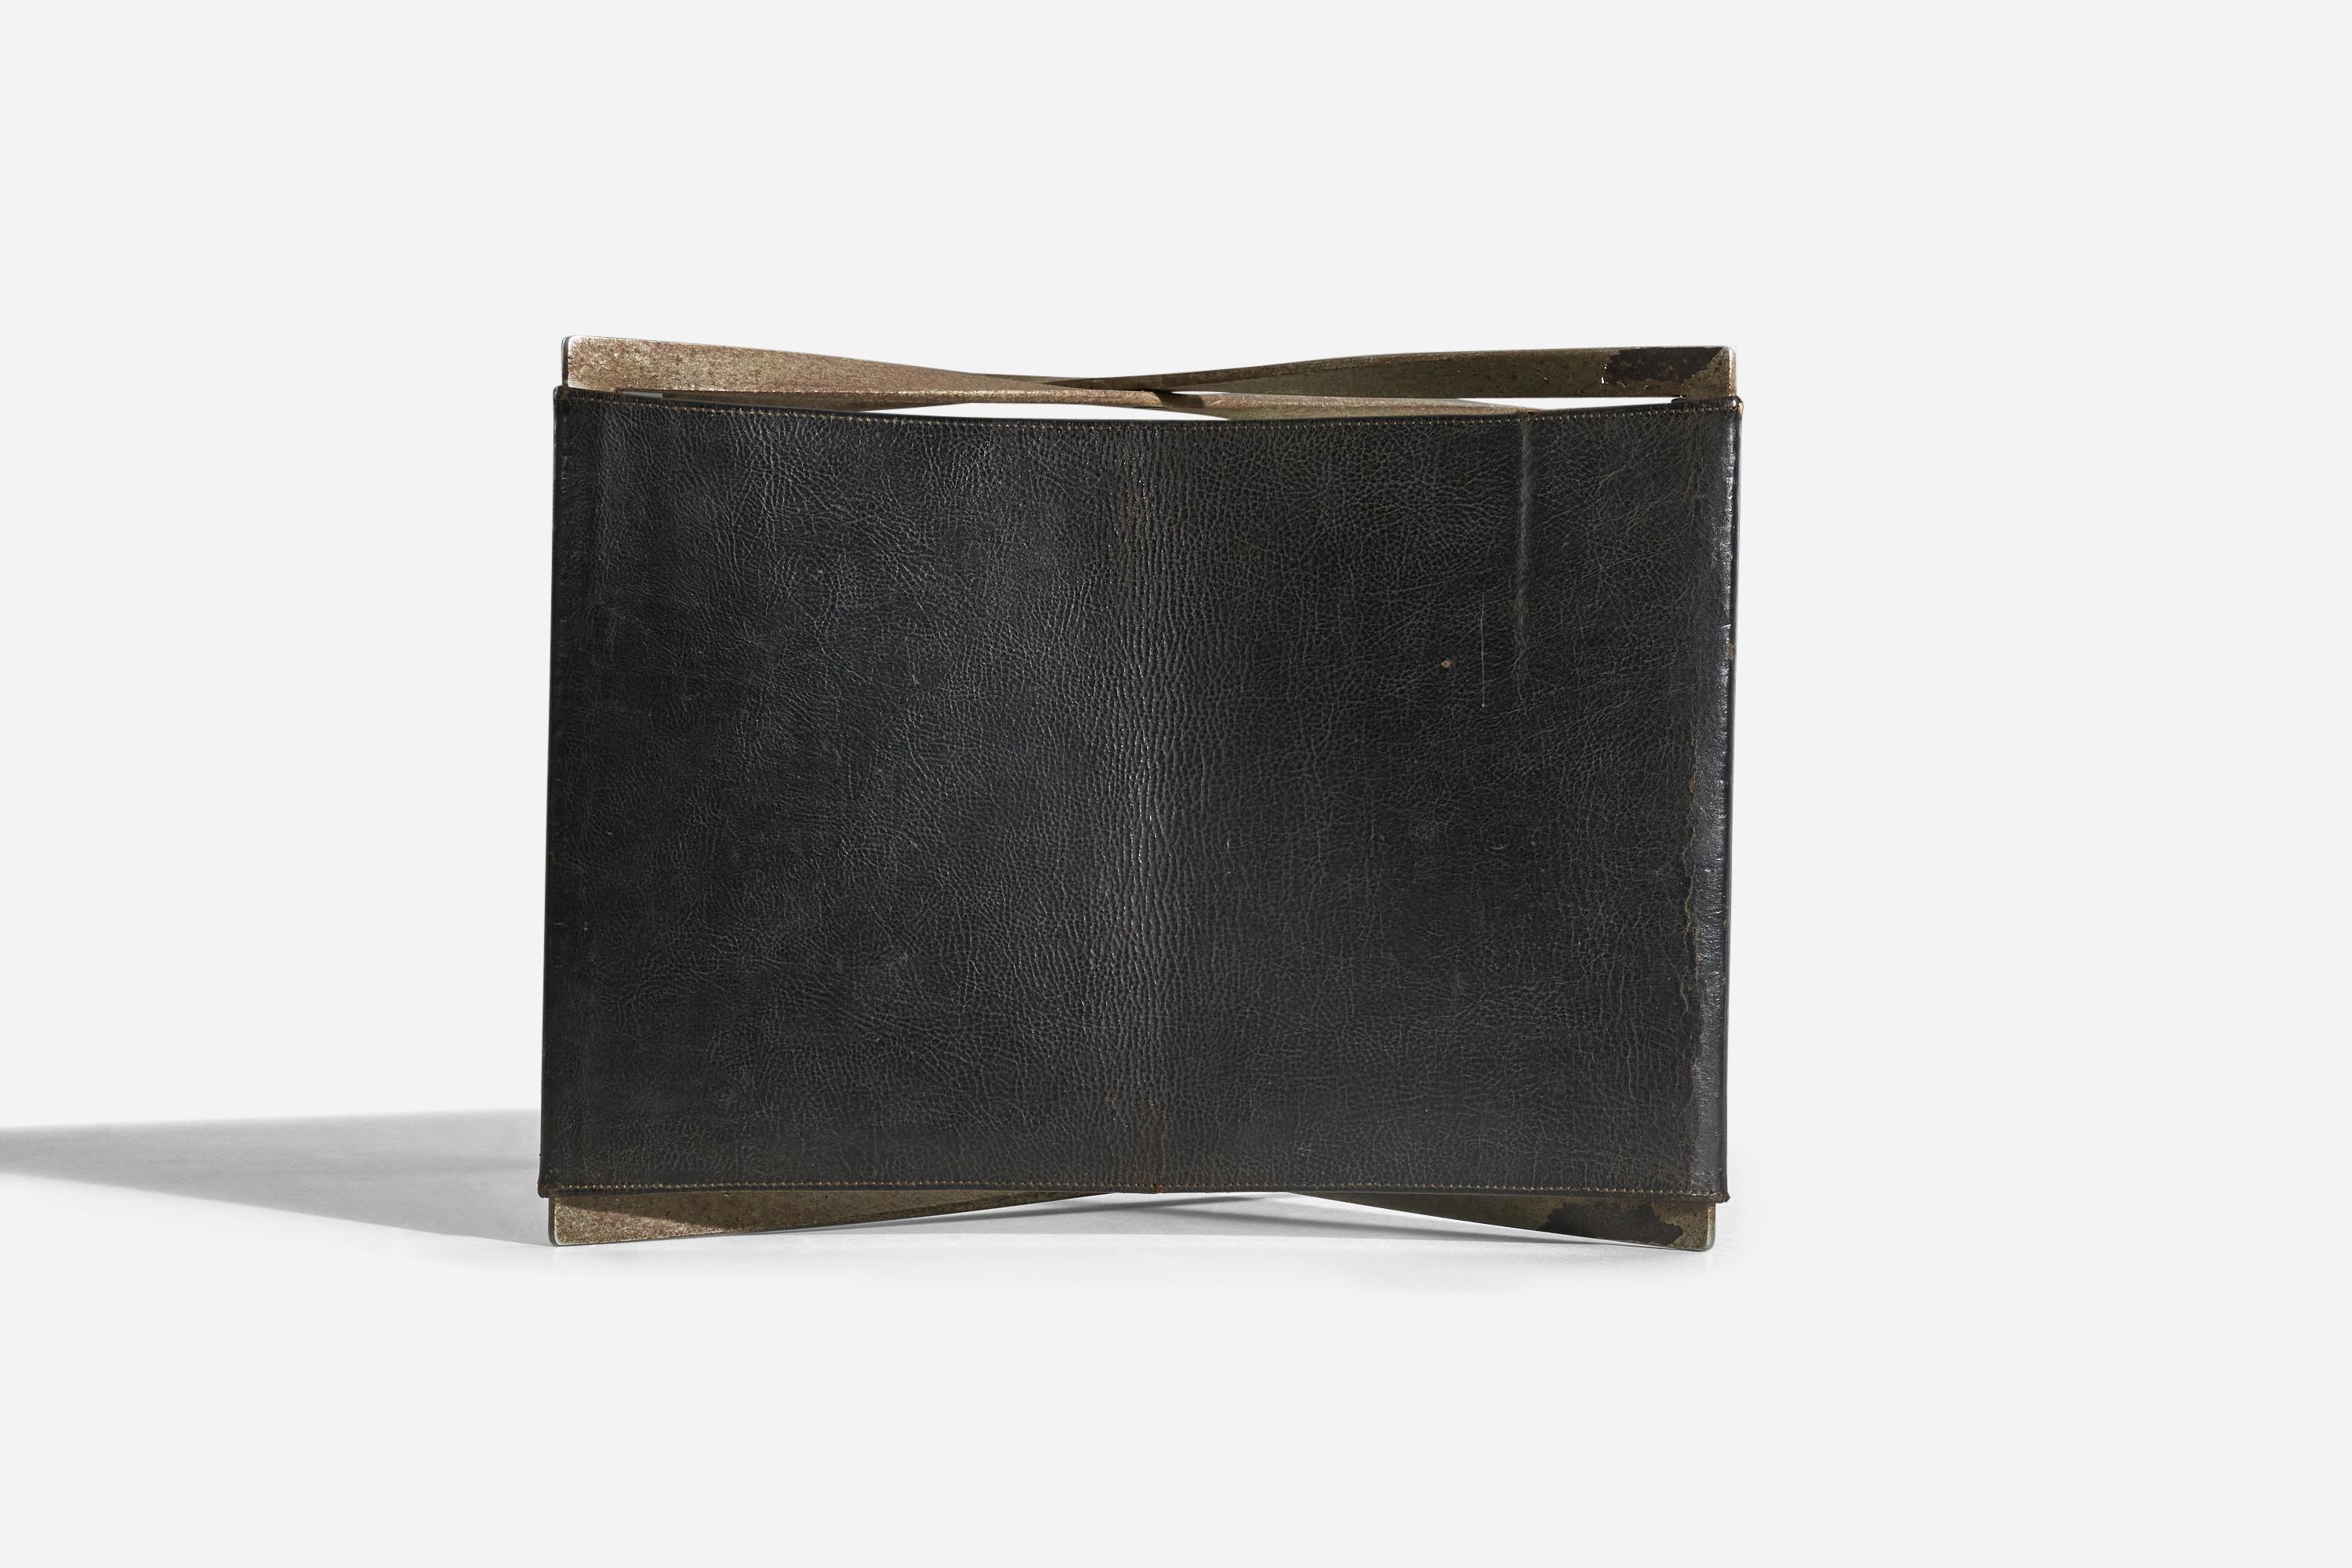 Poul Kjaerholm, Stool, Steel, Leather, E. Kold Christensen, Denmark, 1961 In Good Condition For Sale In High Point, NC